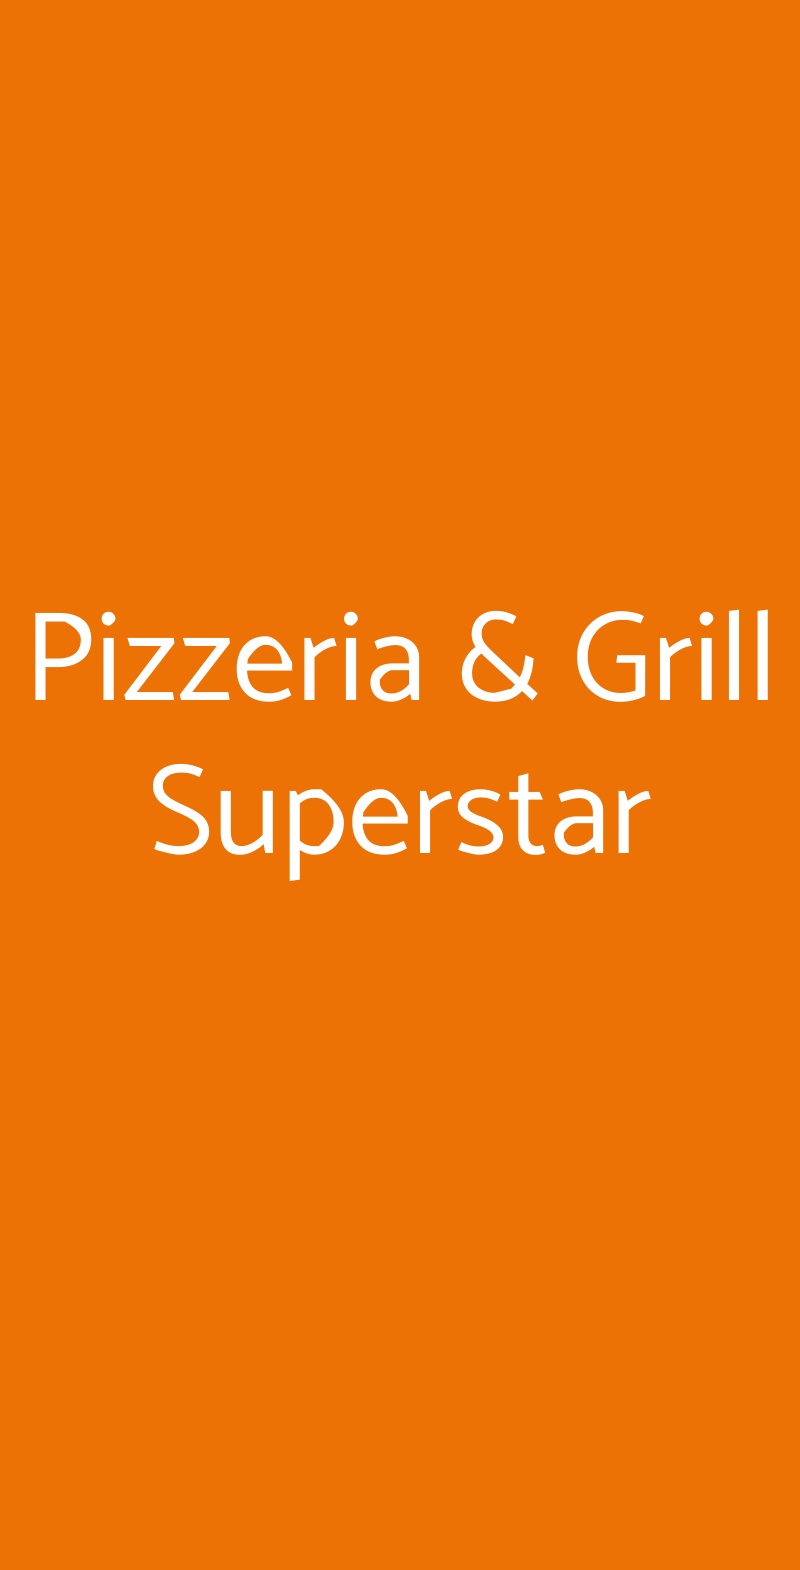 Pizzeria & Grill Superstar Milano menù 1 pagina